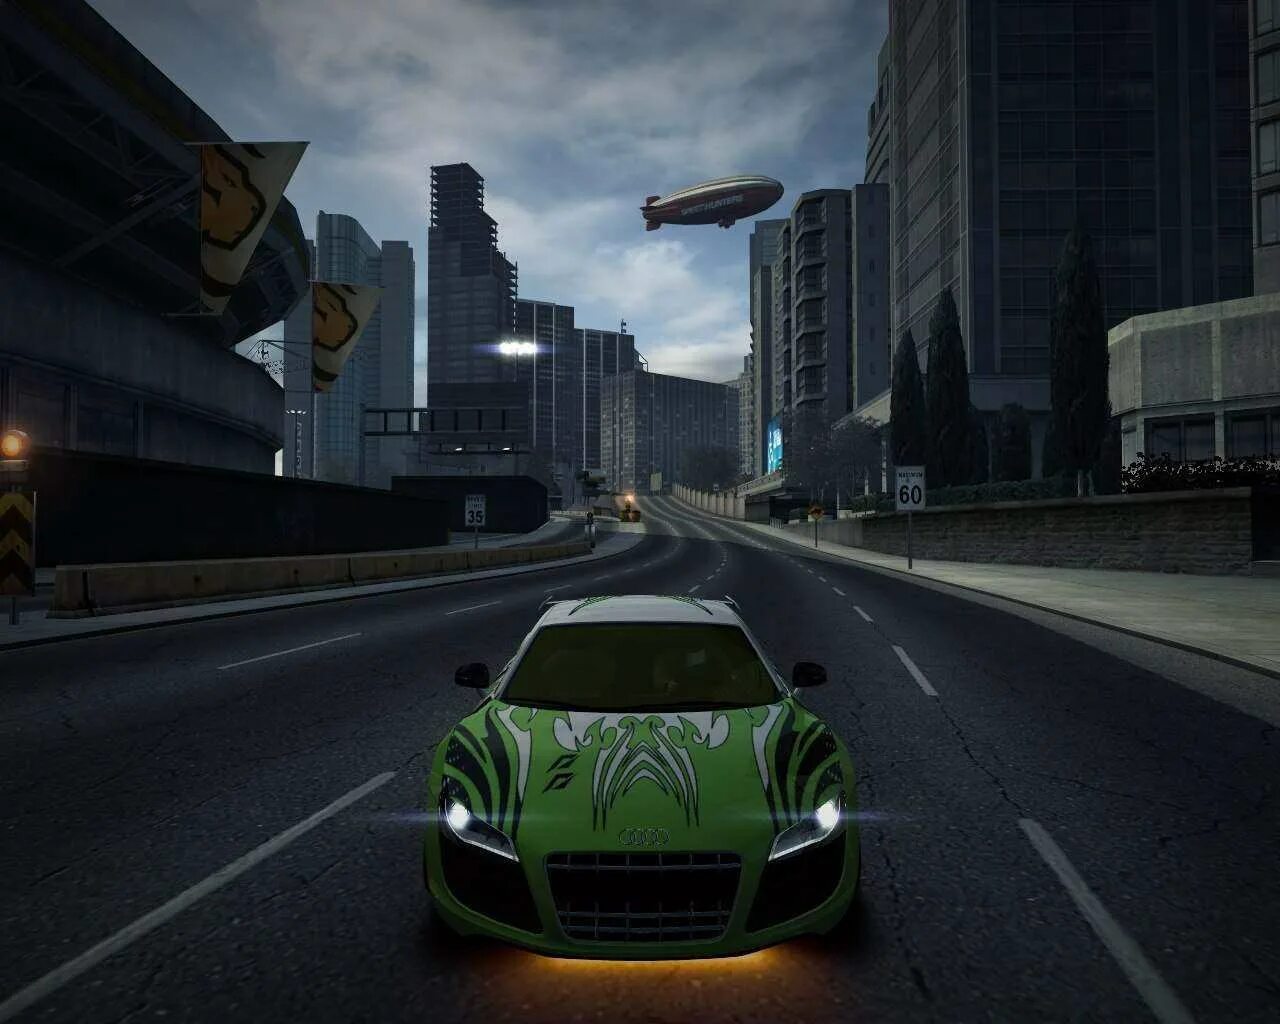 Ворлд спид. NFS World Xbox 360. Need for Speed: World (2010). Need for Speed World 2015. NFS World 2009.